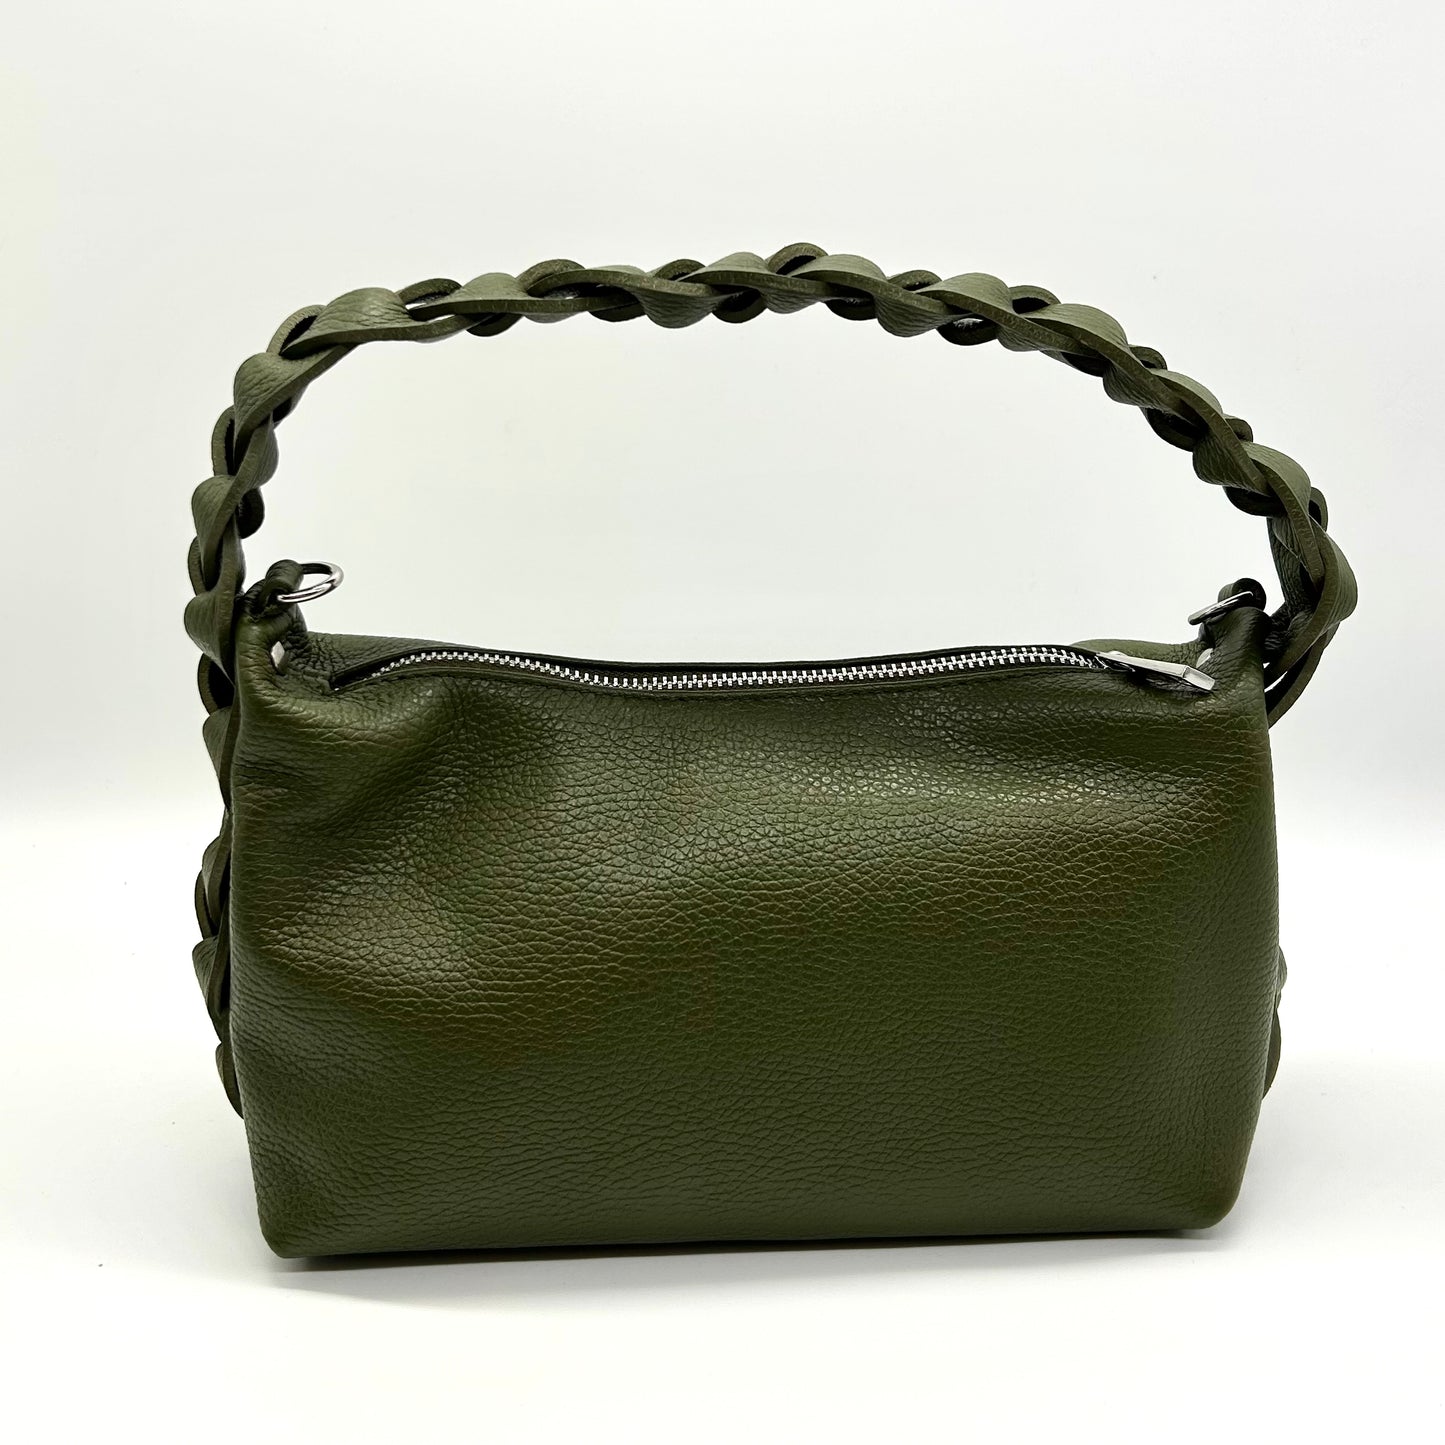 Leather Plait Strap Handbag